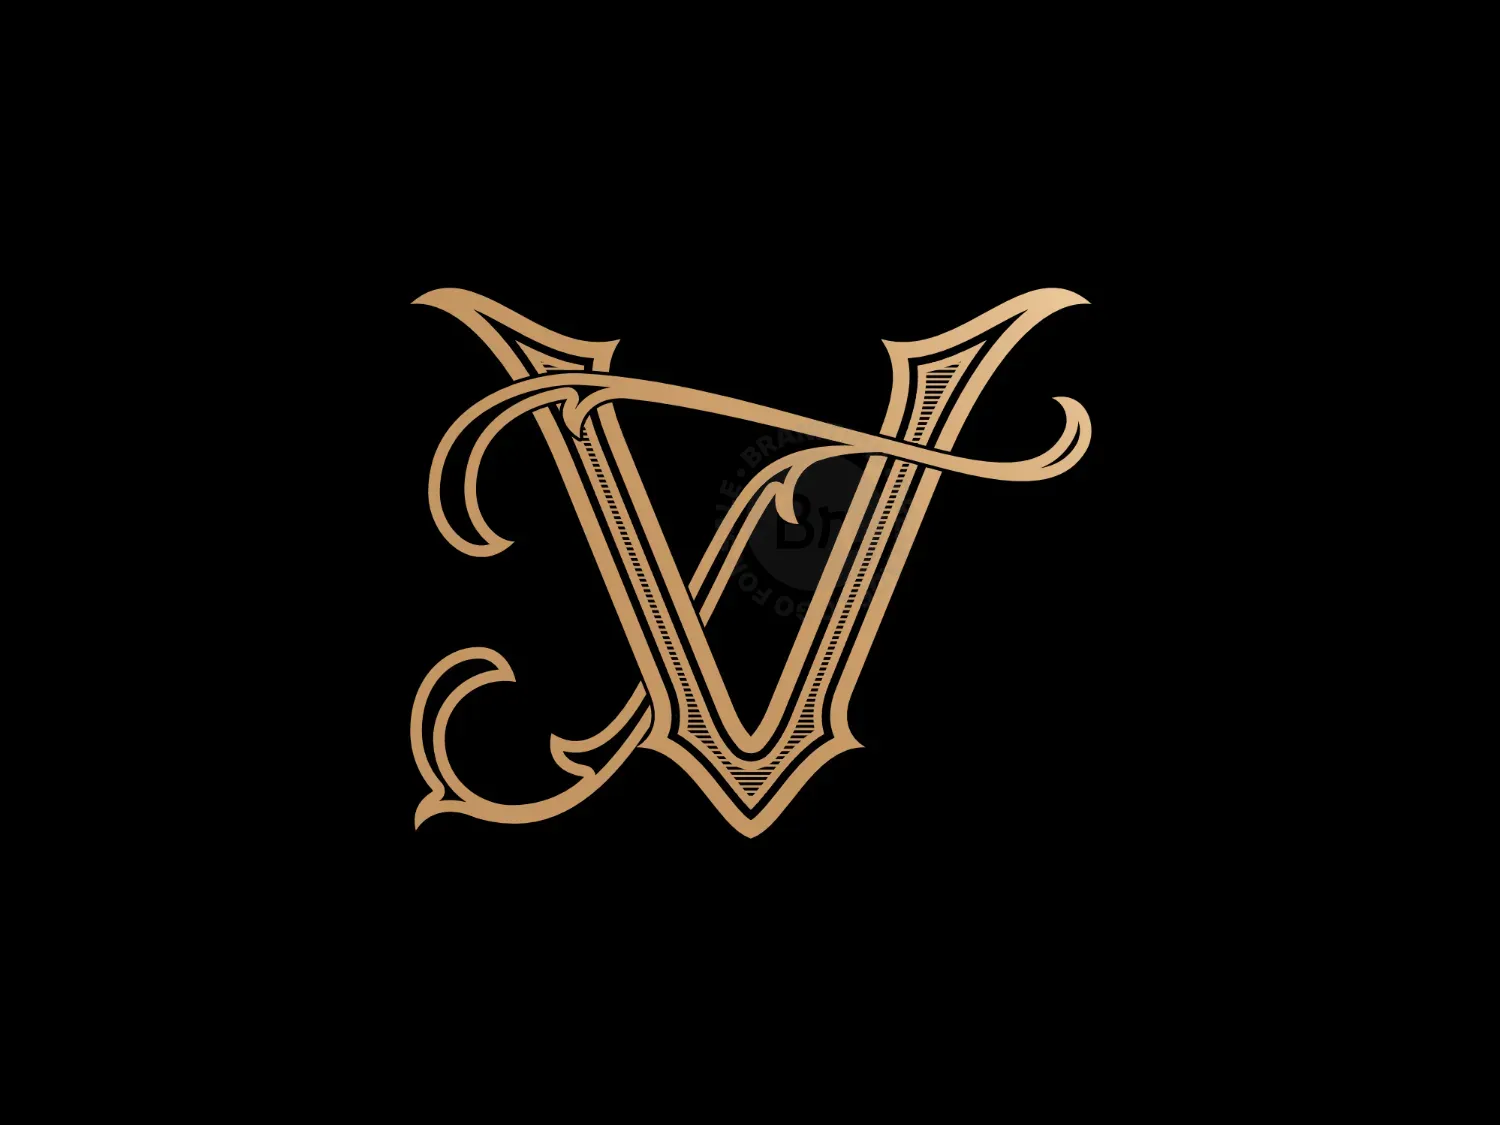 VT Logo by Reza Rachman on Dribbble